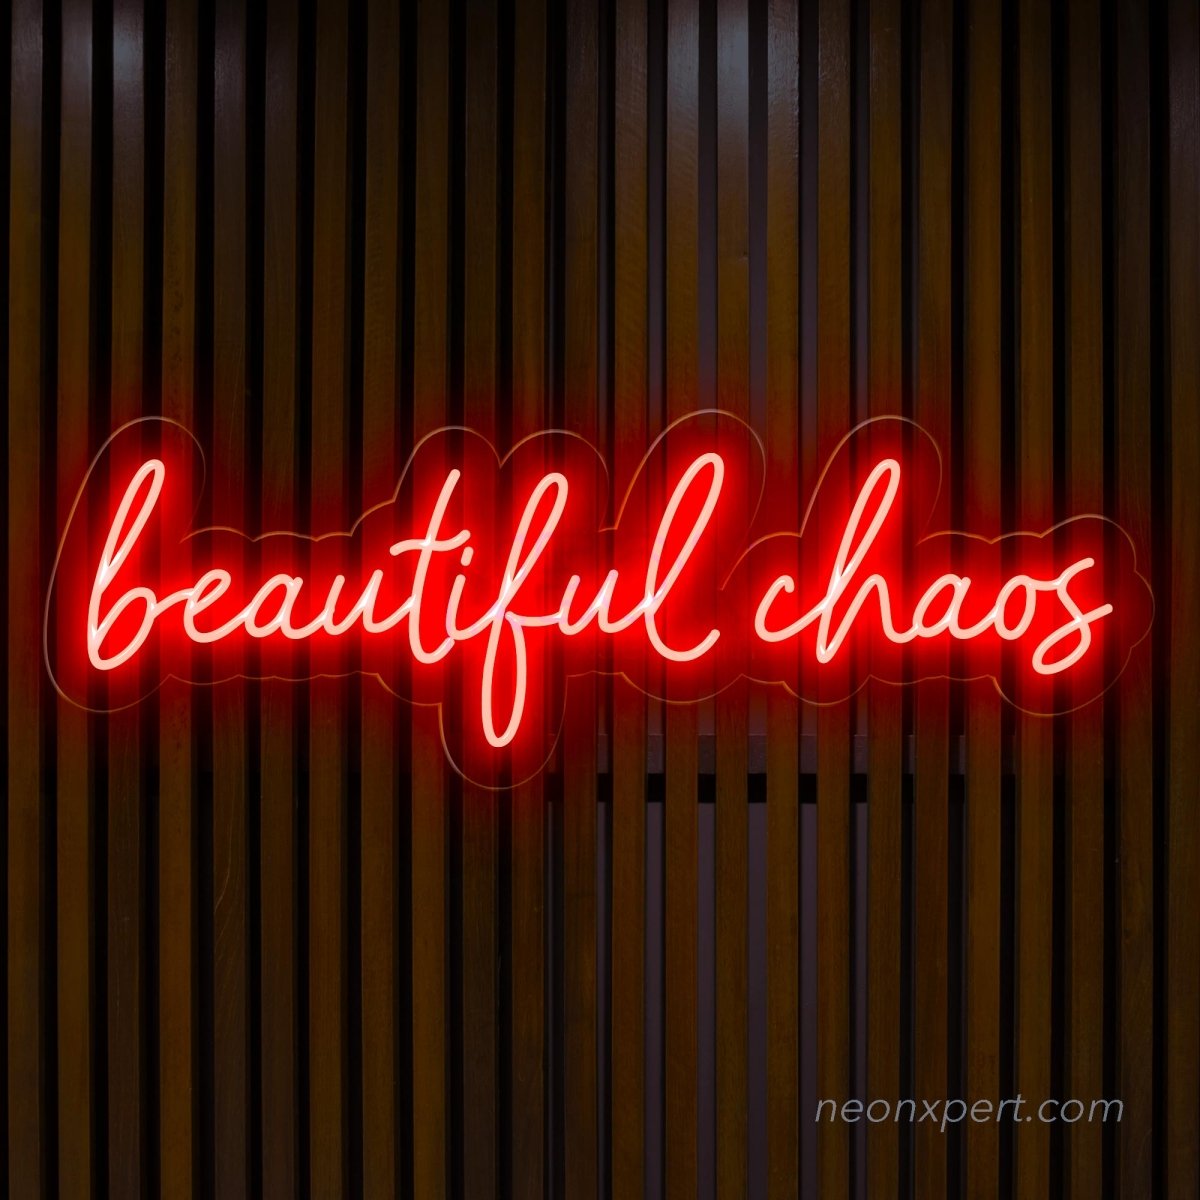 Beautiful Chaos LED Neon Sign - NeonXpert